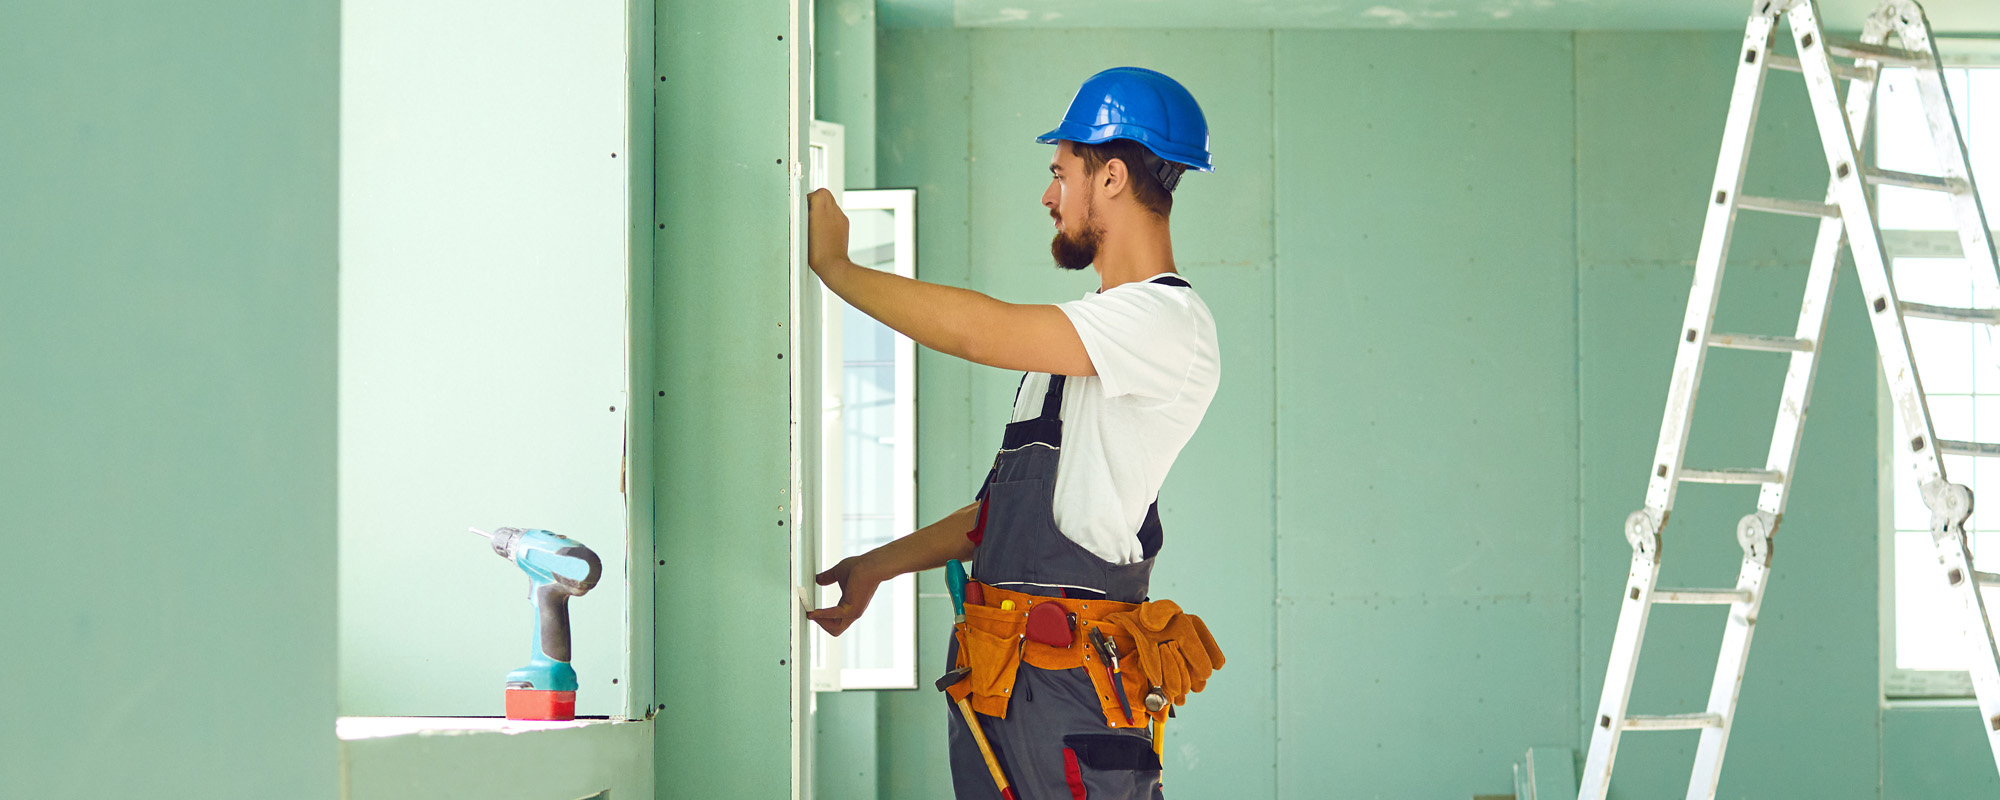 Worker builder installs plasterboard drywall